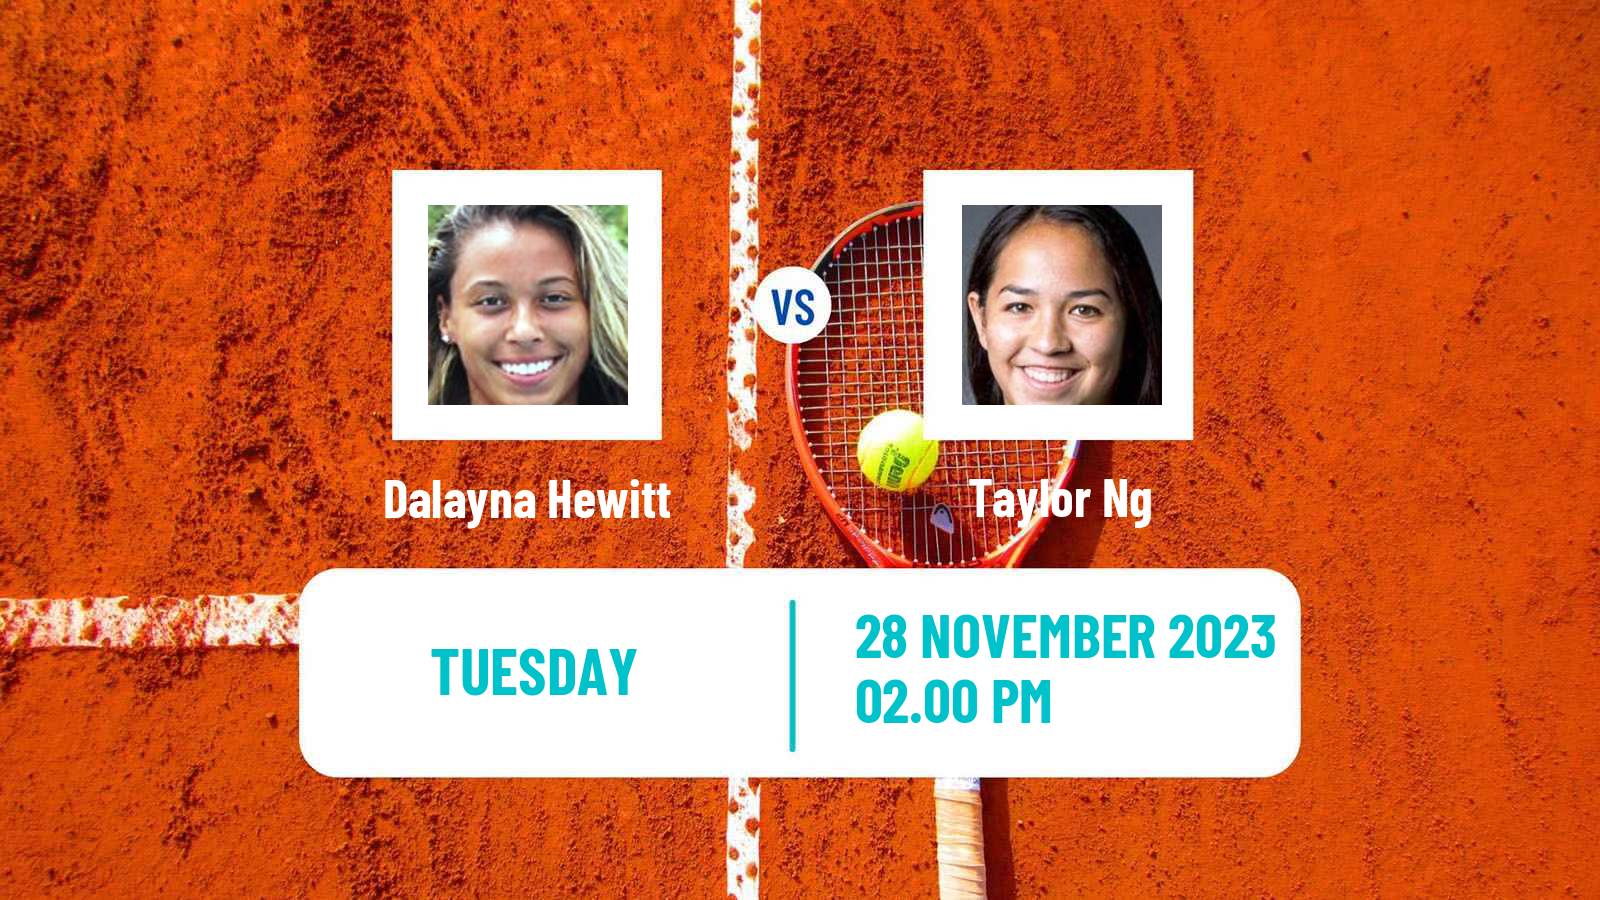 Tennis ITF W40 Veracruz Women Dalayna Hewitt - Taylor Ng